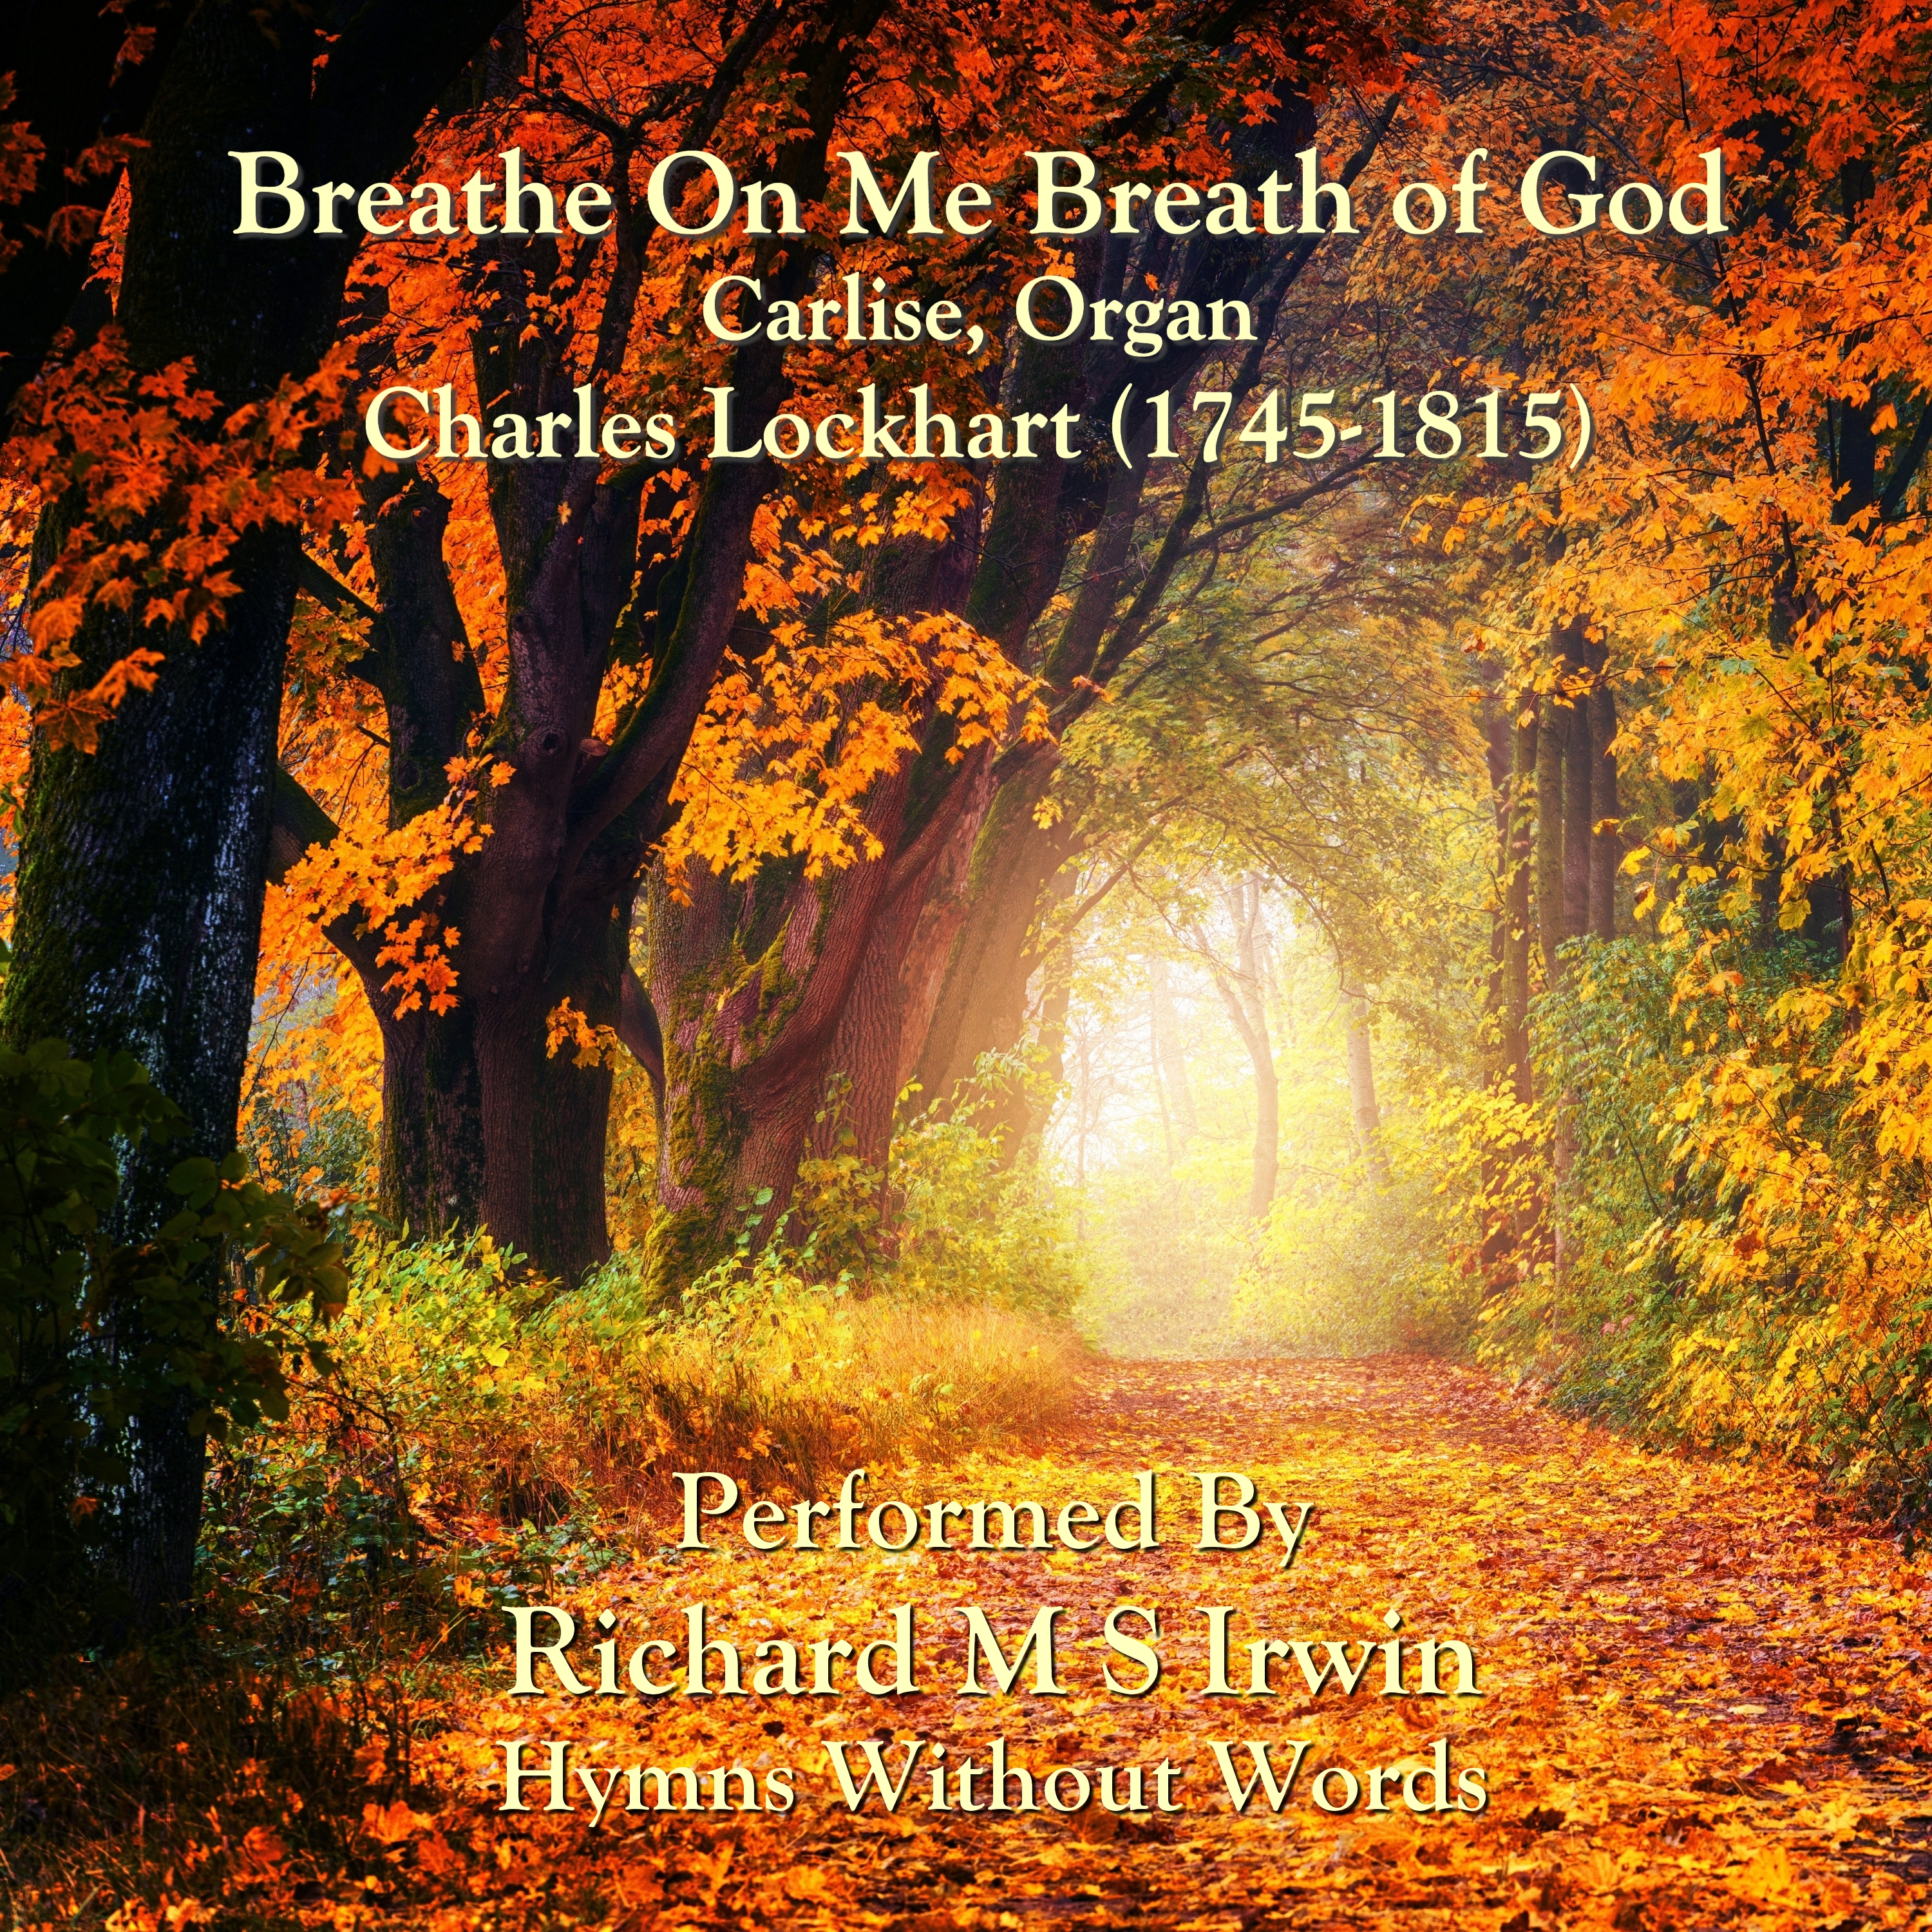 Breathe On Me Breath Of God Carlise, Organ